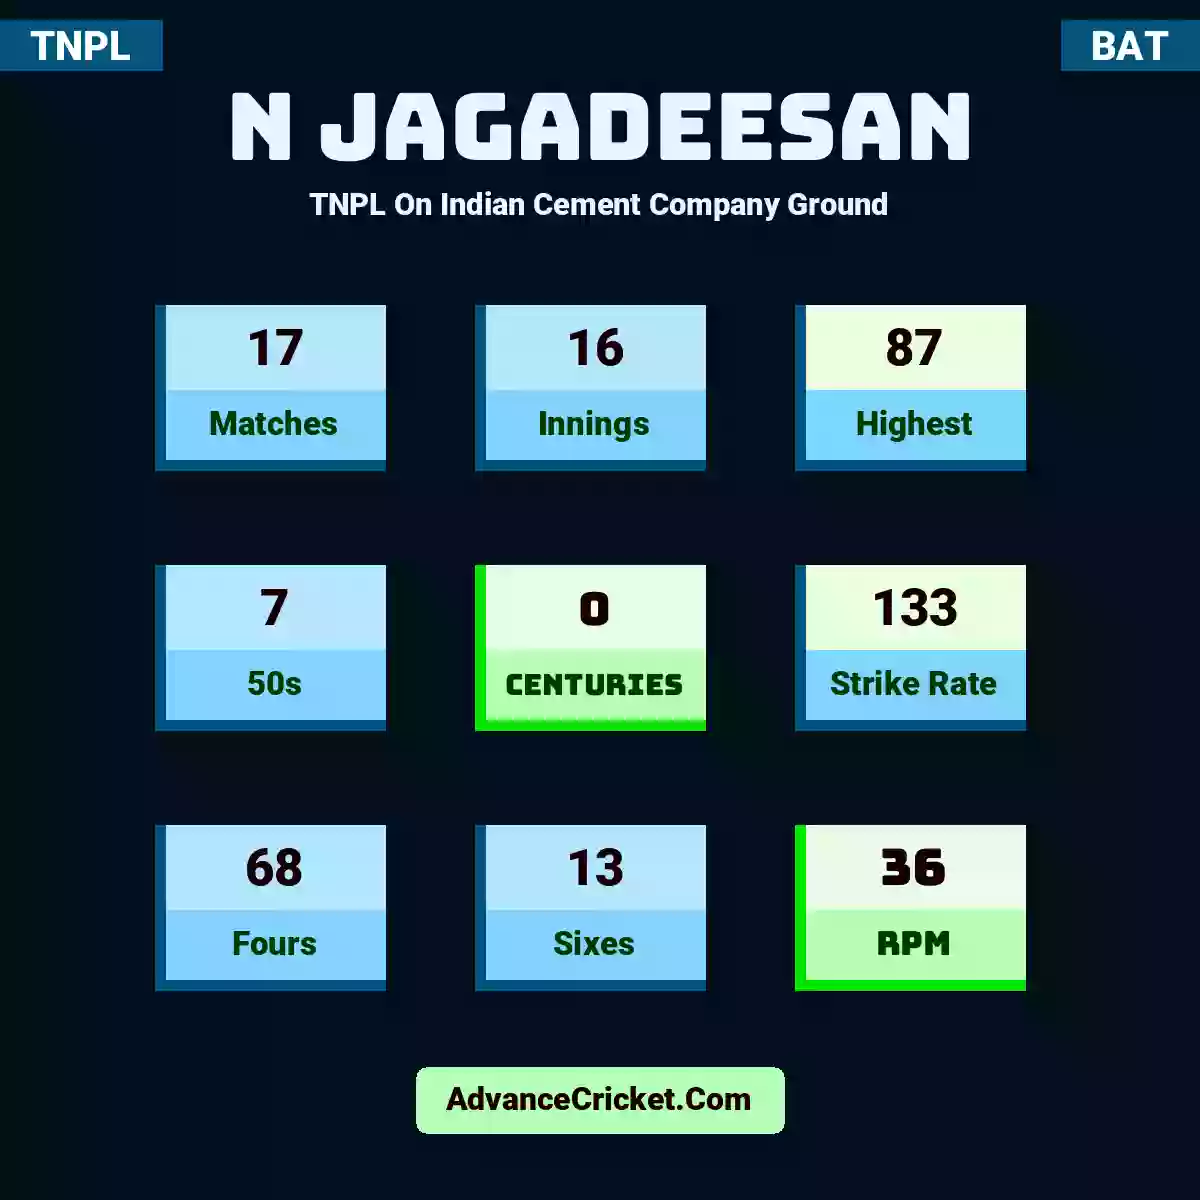 N Jagadeesan TNPL  On Indian Cement Company Ground, N Jagadeesan played 17 matches, scored 87 runs as highest, 7 half-centuries, and 0 centuries, with a strike rate of 133. N.Jagadeesan hit 68 fours and 13 sixes, with an RPM of 36.